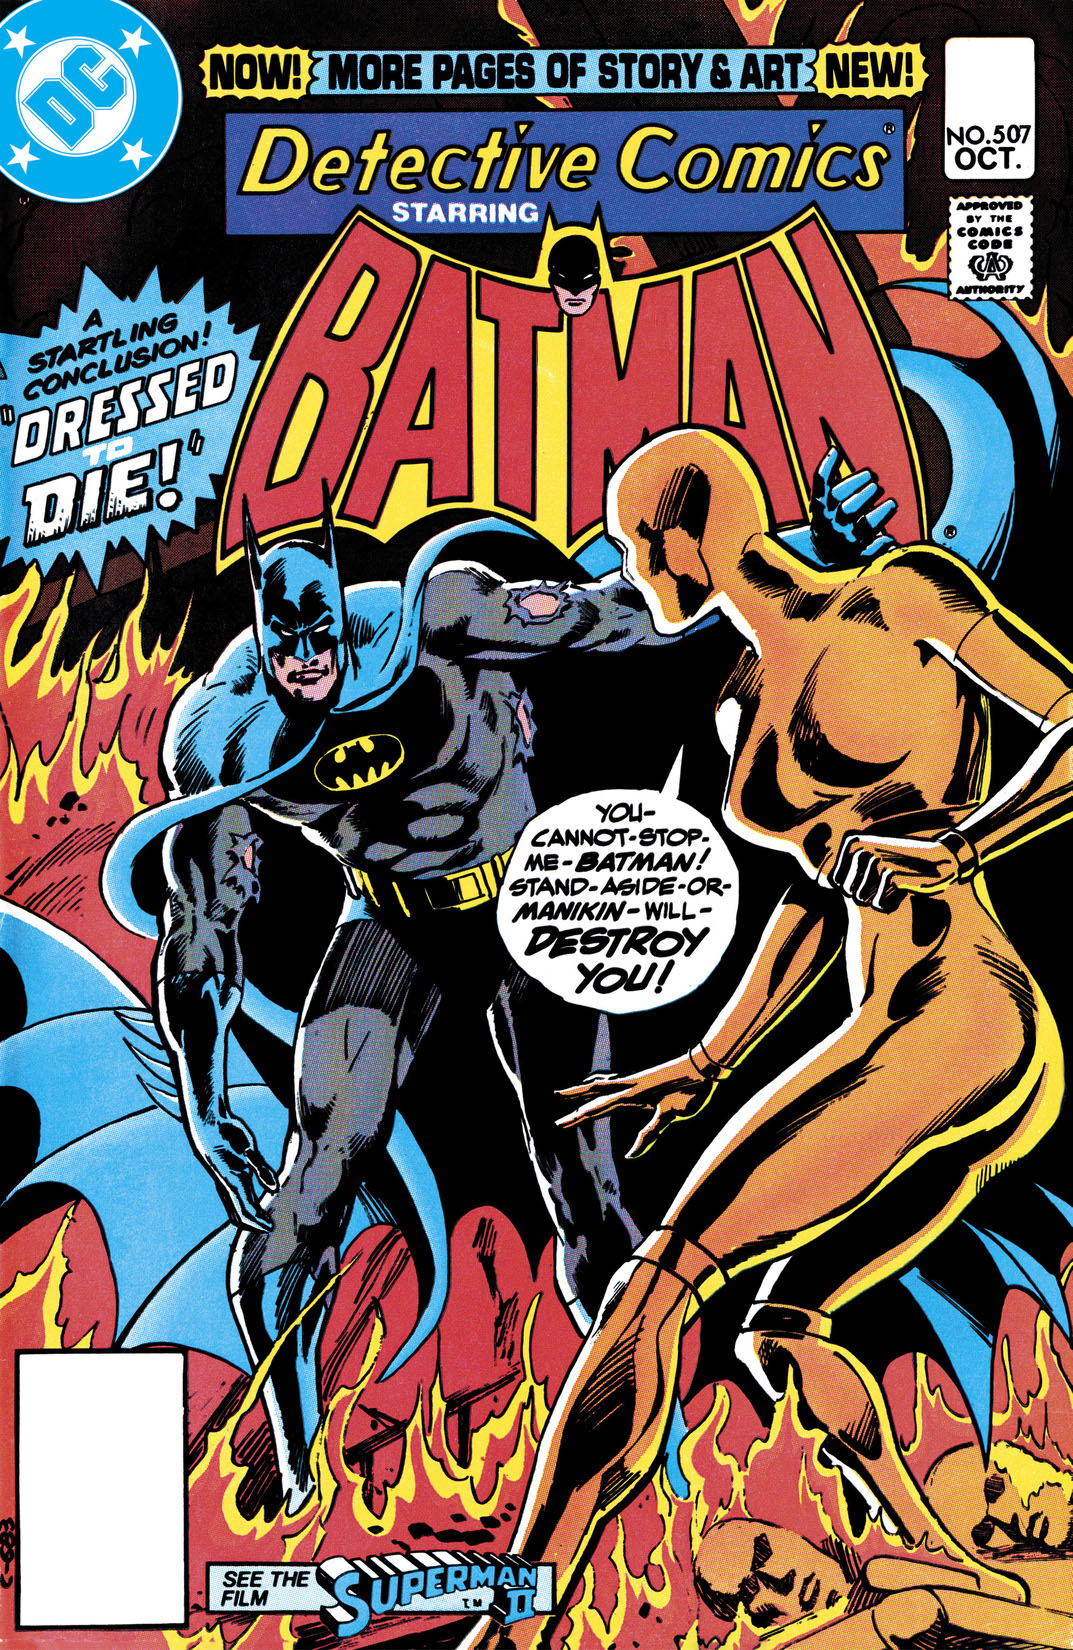 Detective Comics (1937-) #507 preview images